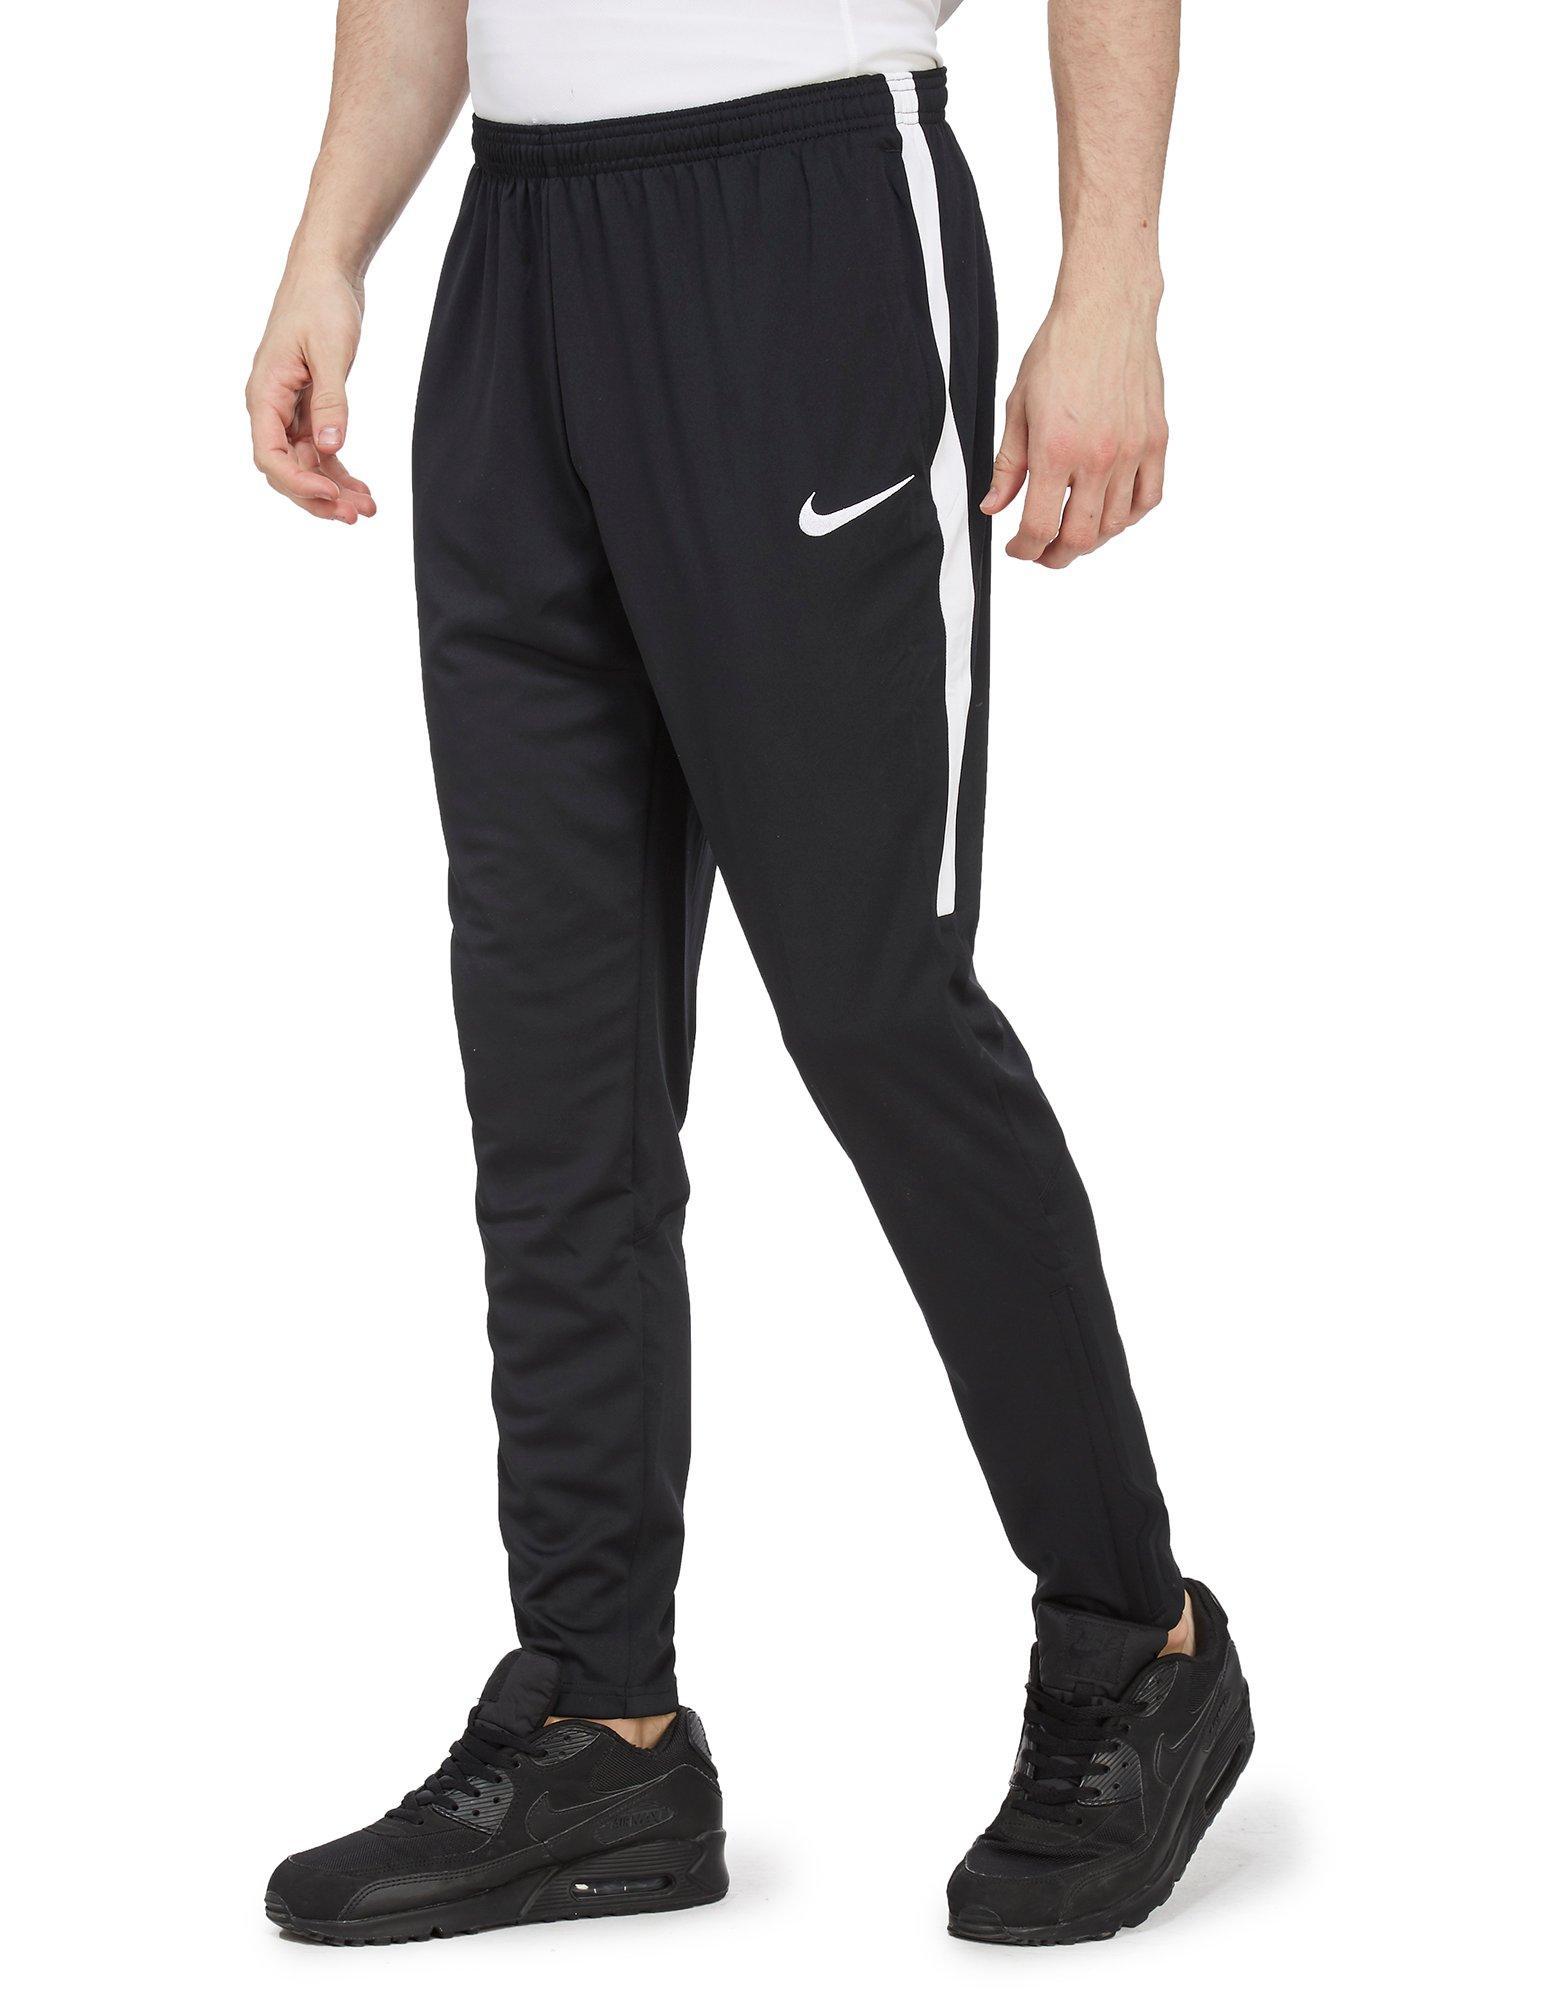 Nike Synthetic Academy 17 Pants in 